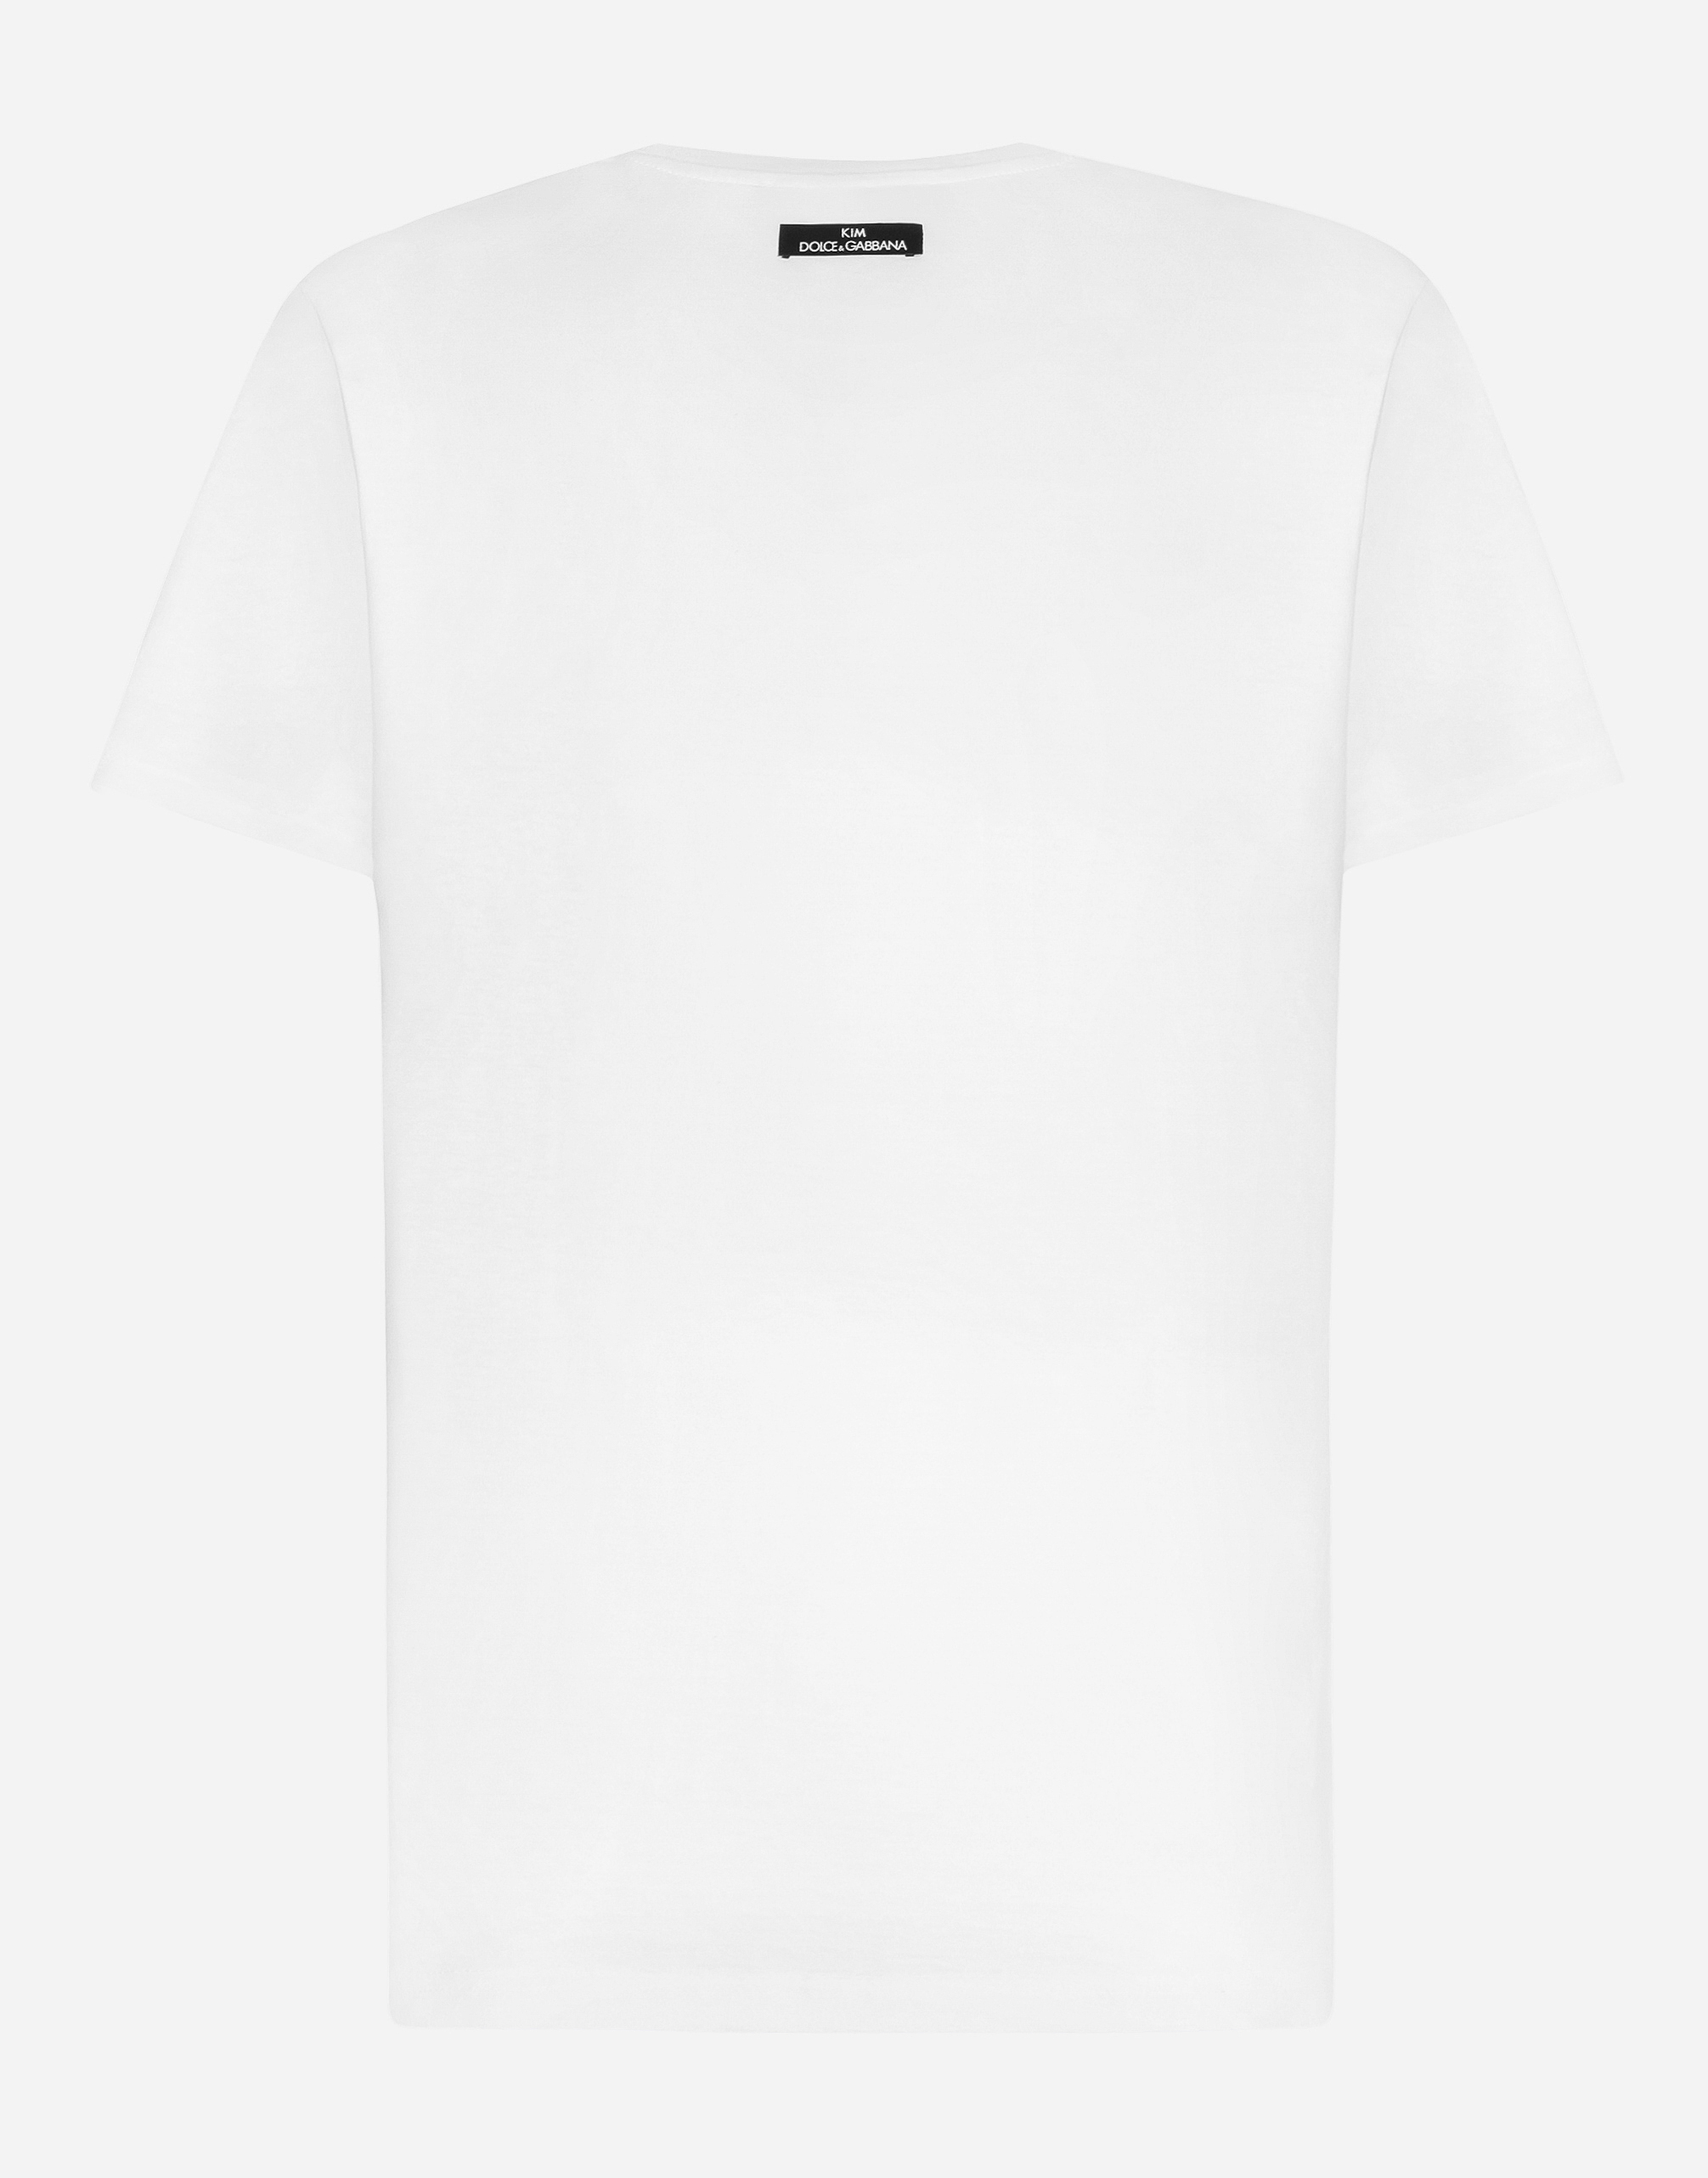 T-shirts and Sweatshirts for Women | Dolce&Gabbana